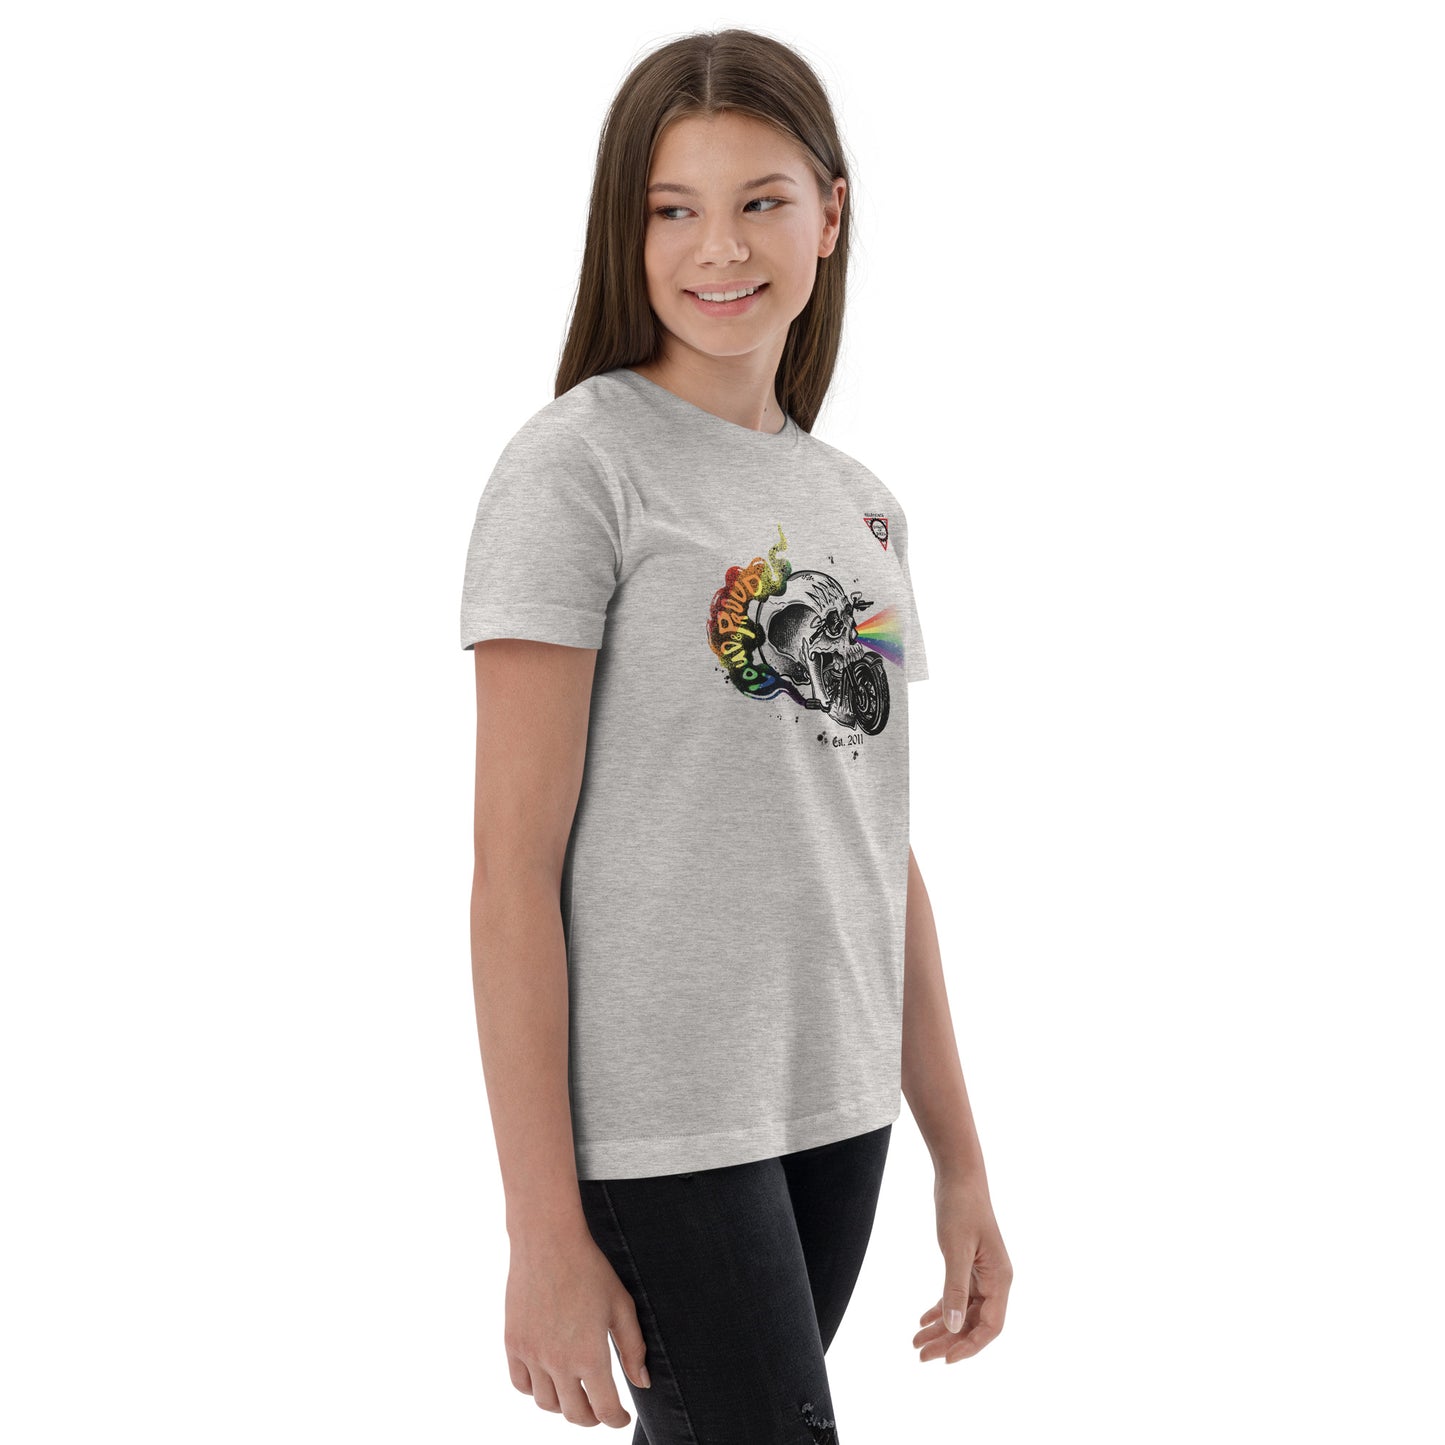 Youth jersey t-shirt - Loud & Proud Motomouth - Rainbow print